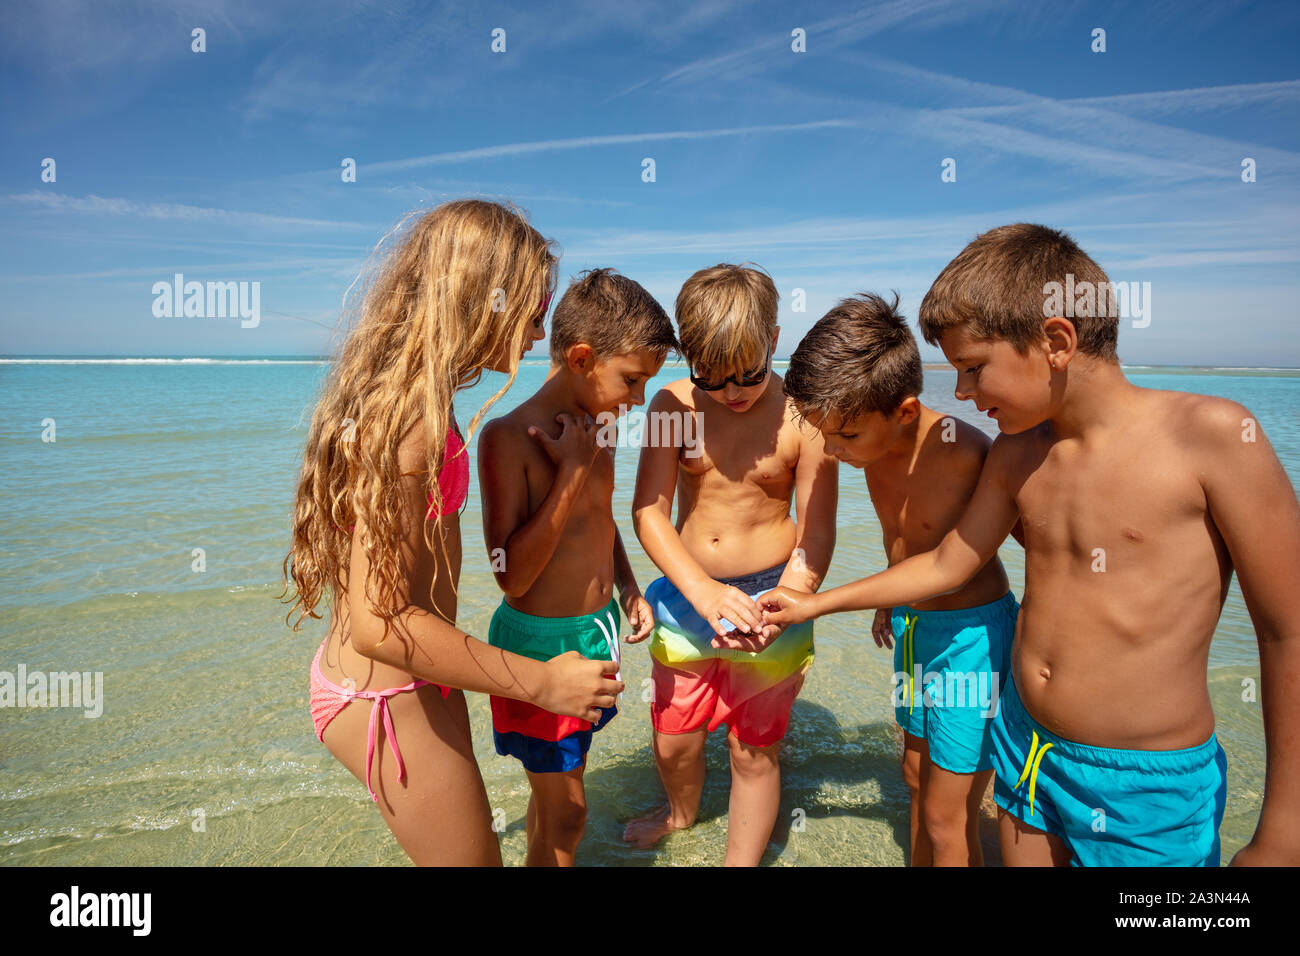 Boys bikini hi-res stock photography and images - Alamy